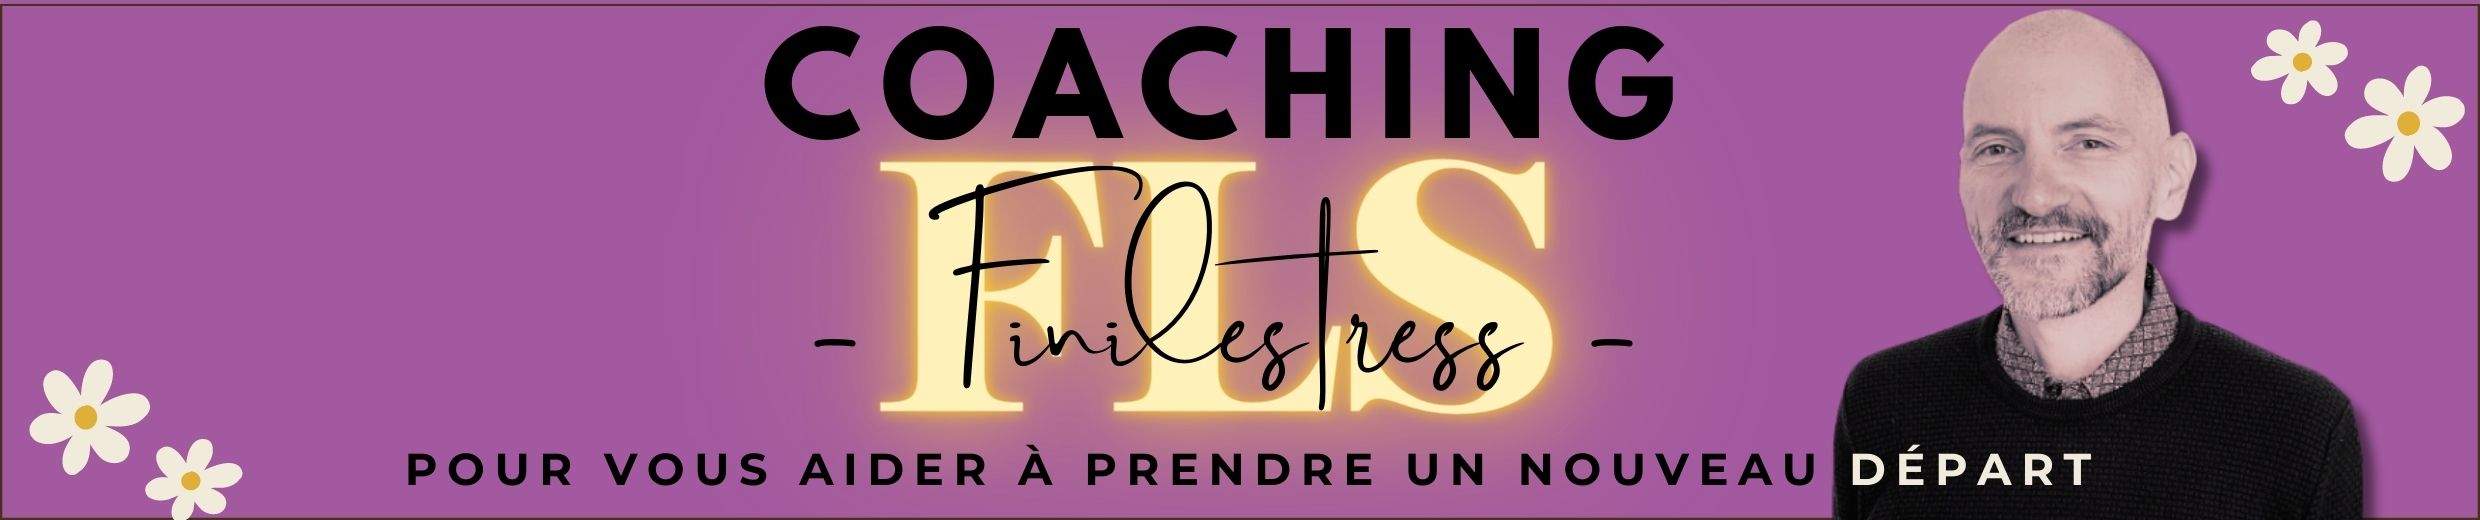 Coaching finilestress